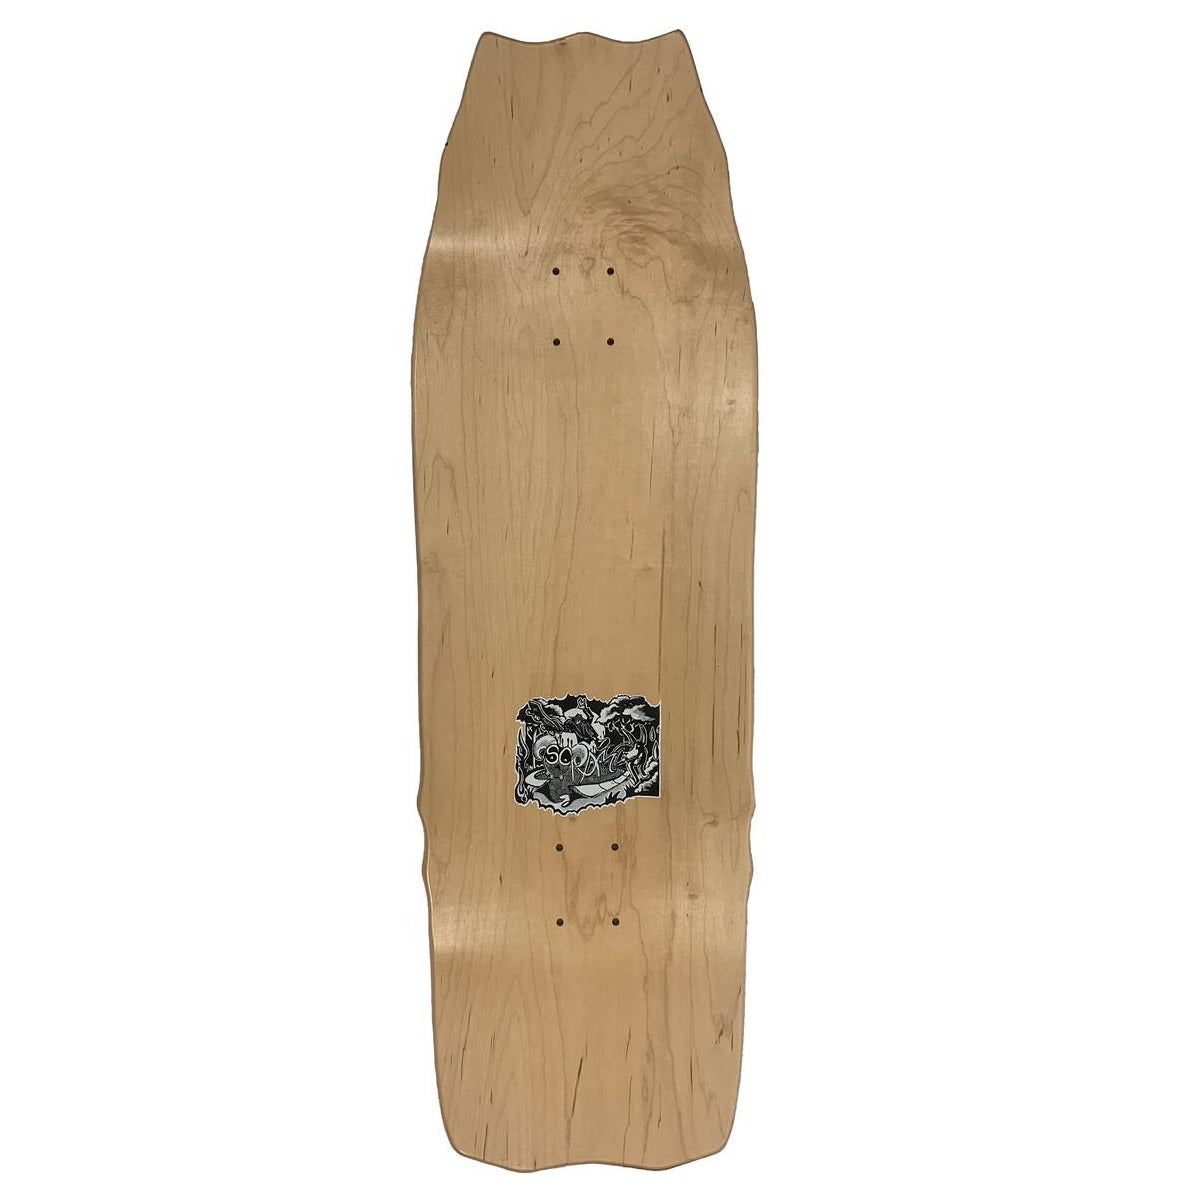 Scram Skateboards "Tripples" 10.25" Deck